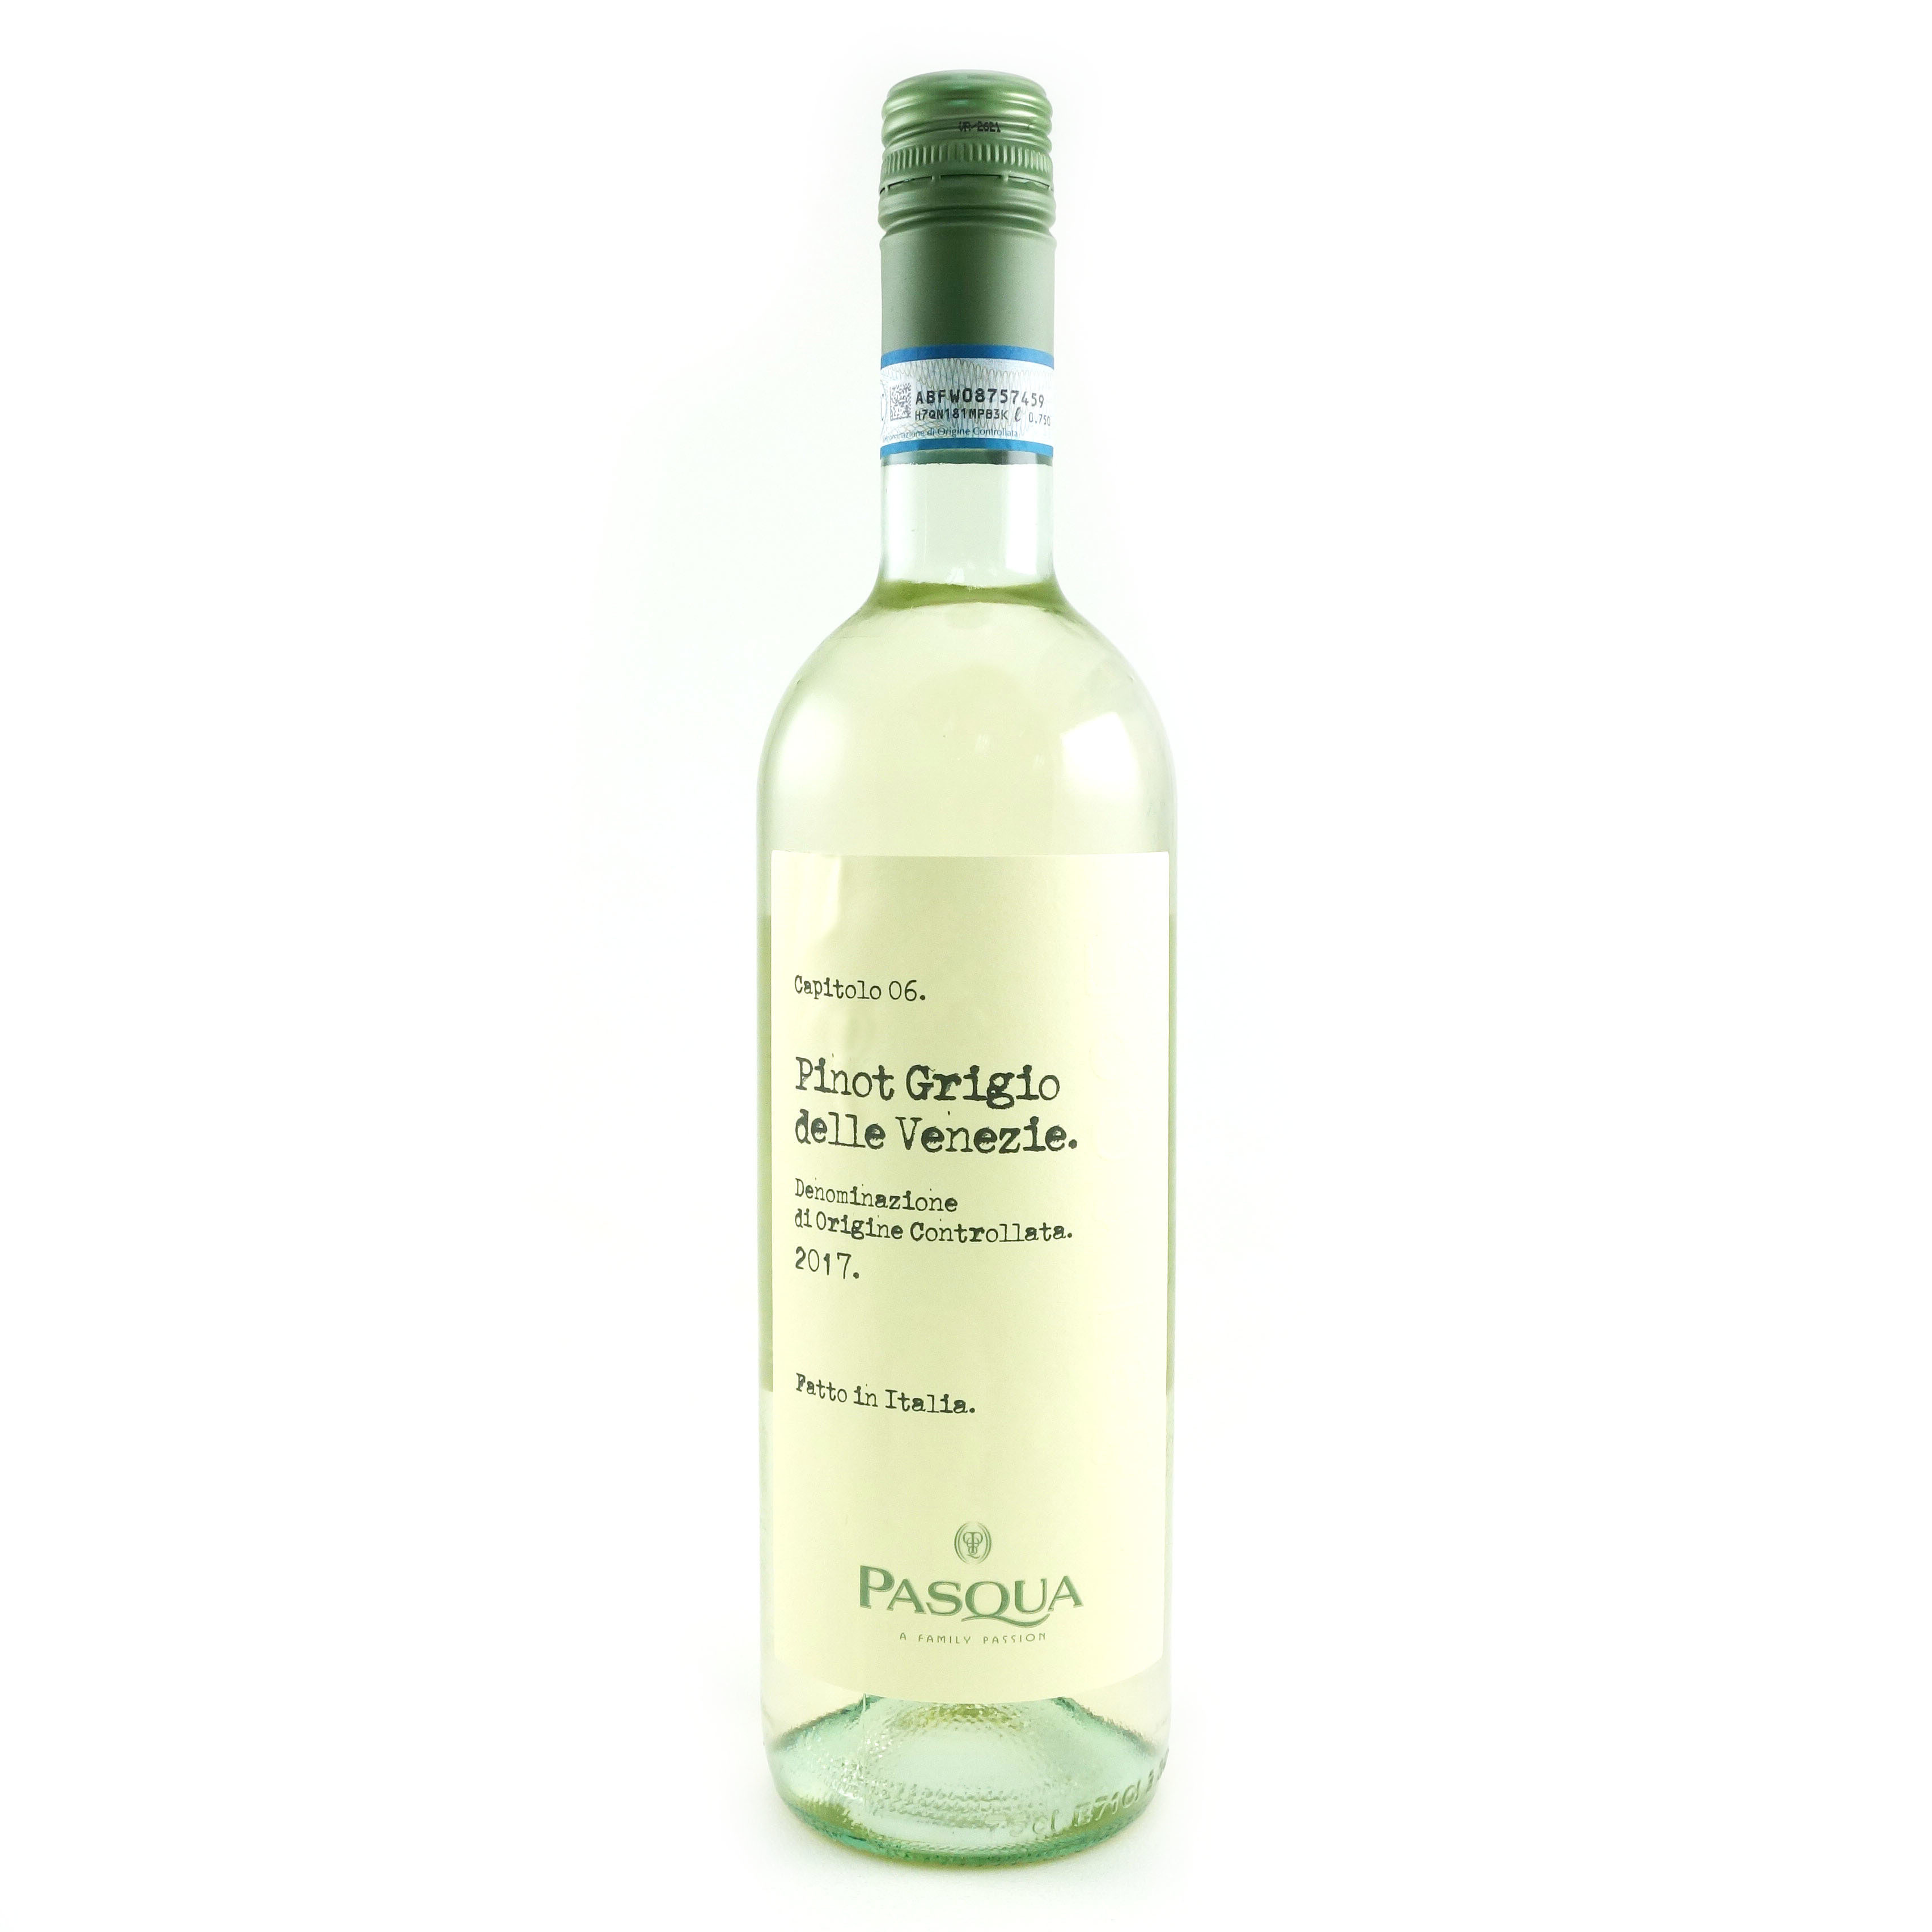 White Wine - Pasqua Pinot Grigio 2017 75cl - Italy*